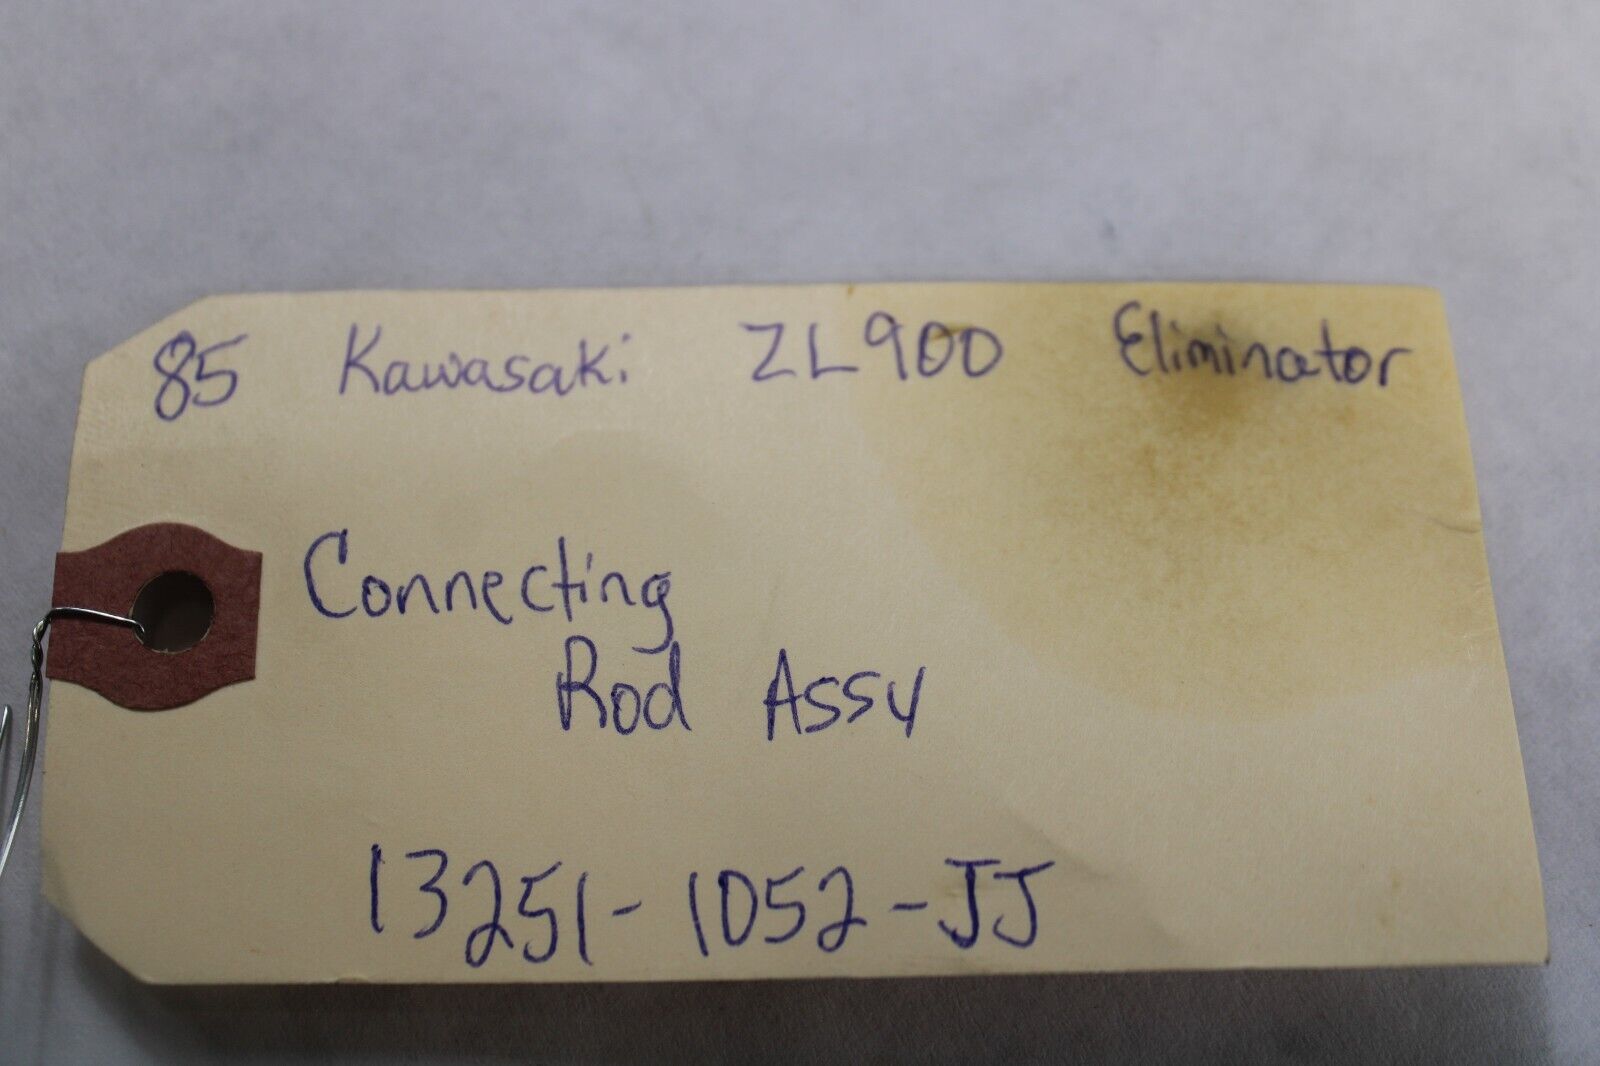 1985 Kawasaki Eliminator ZL900 Connecting Rod Assy 13251-1052-JJ 